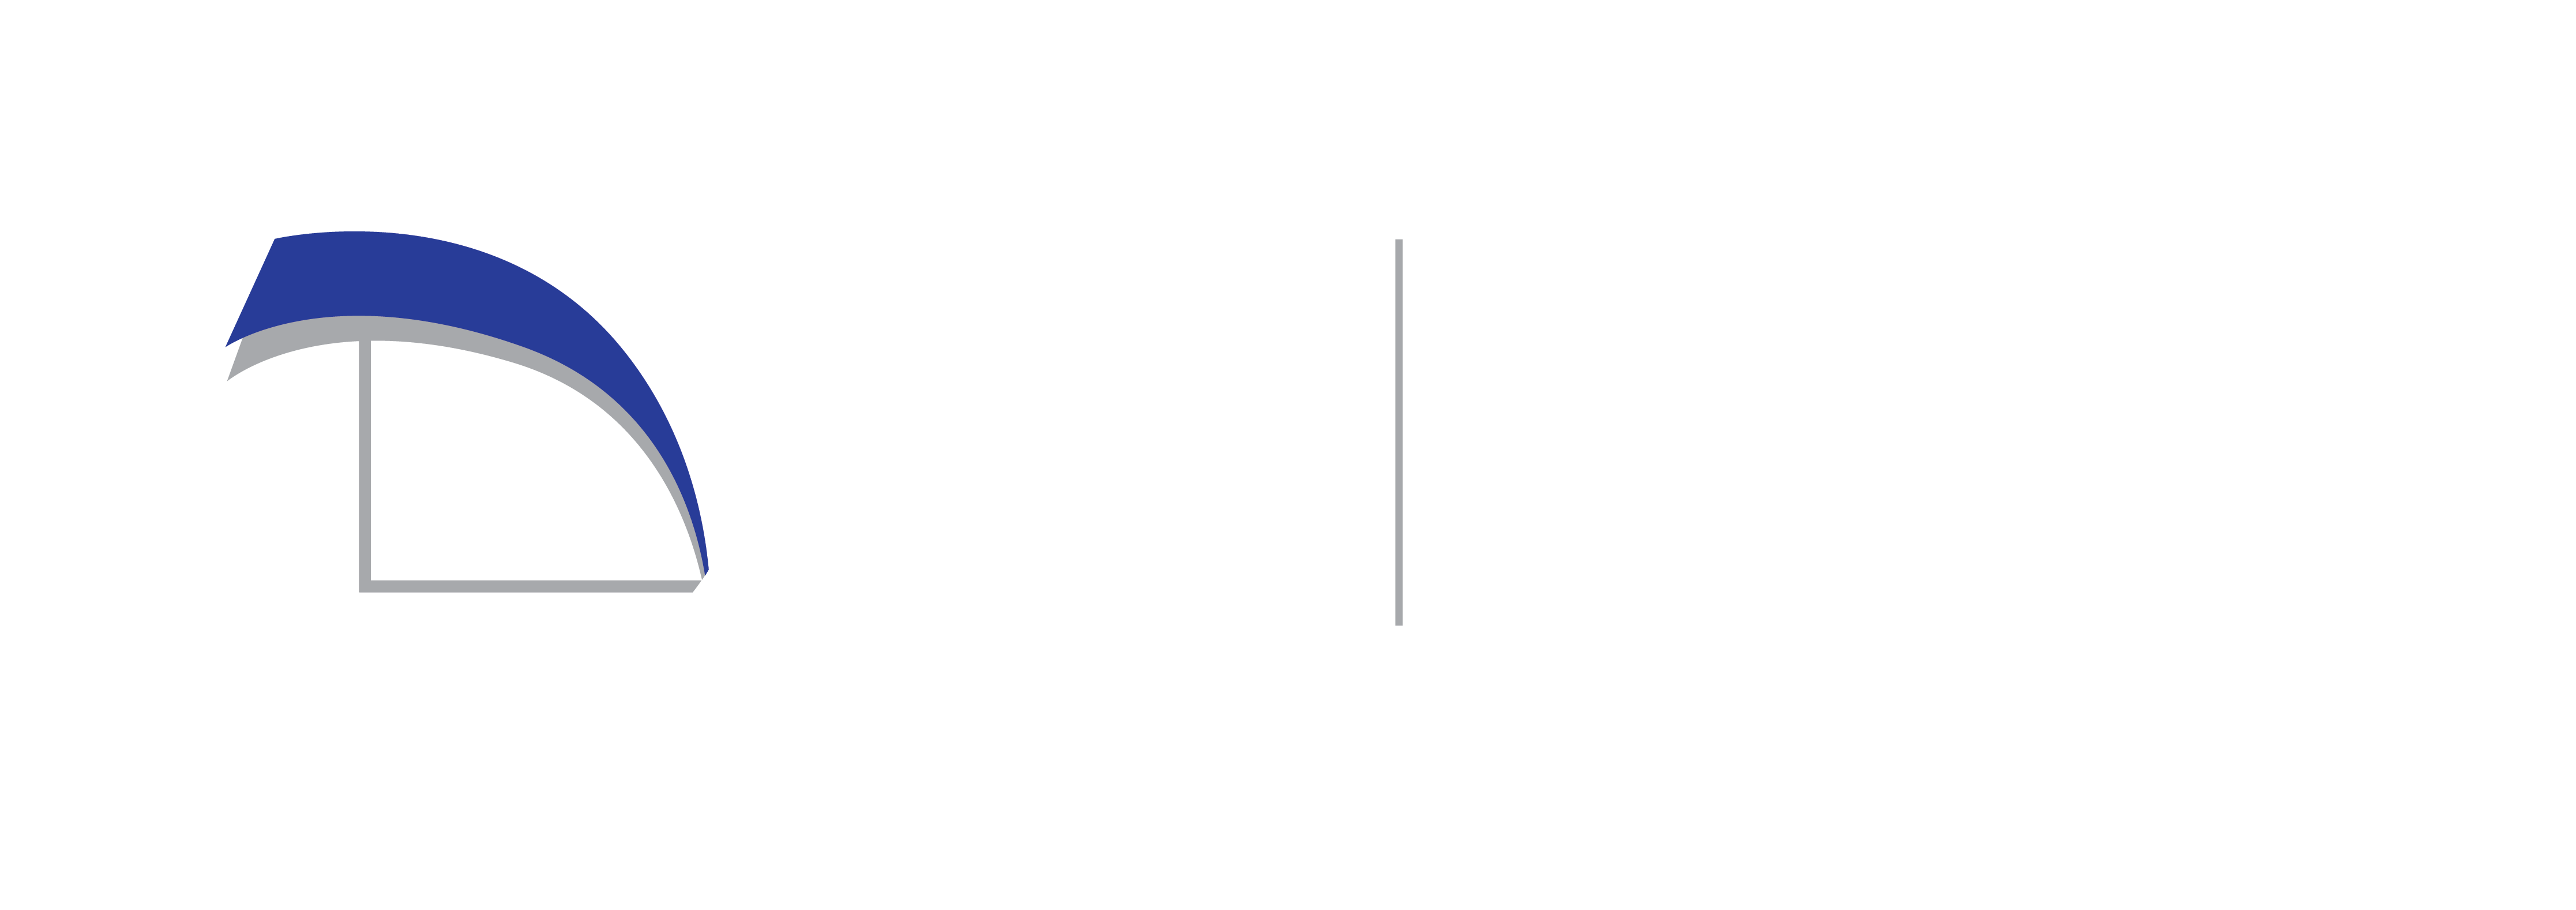 PPF Financial